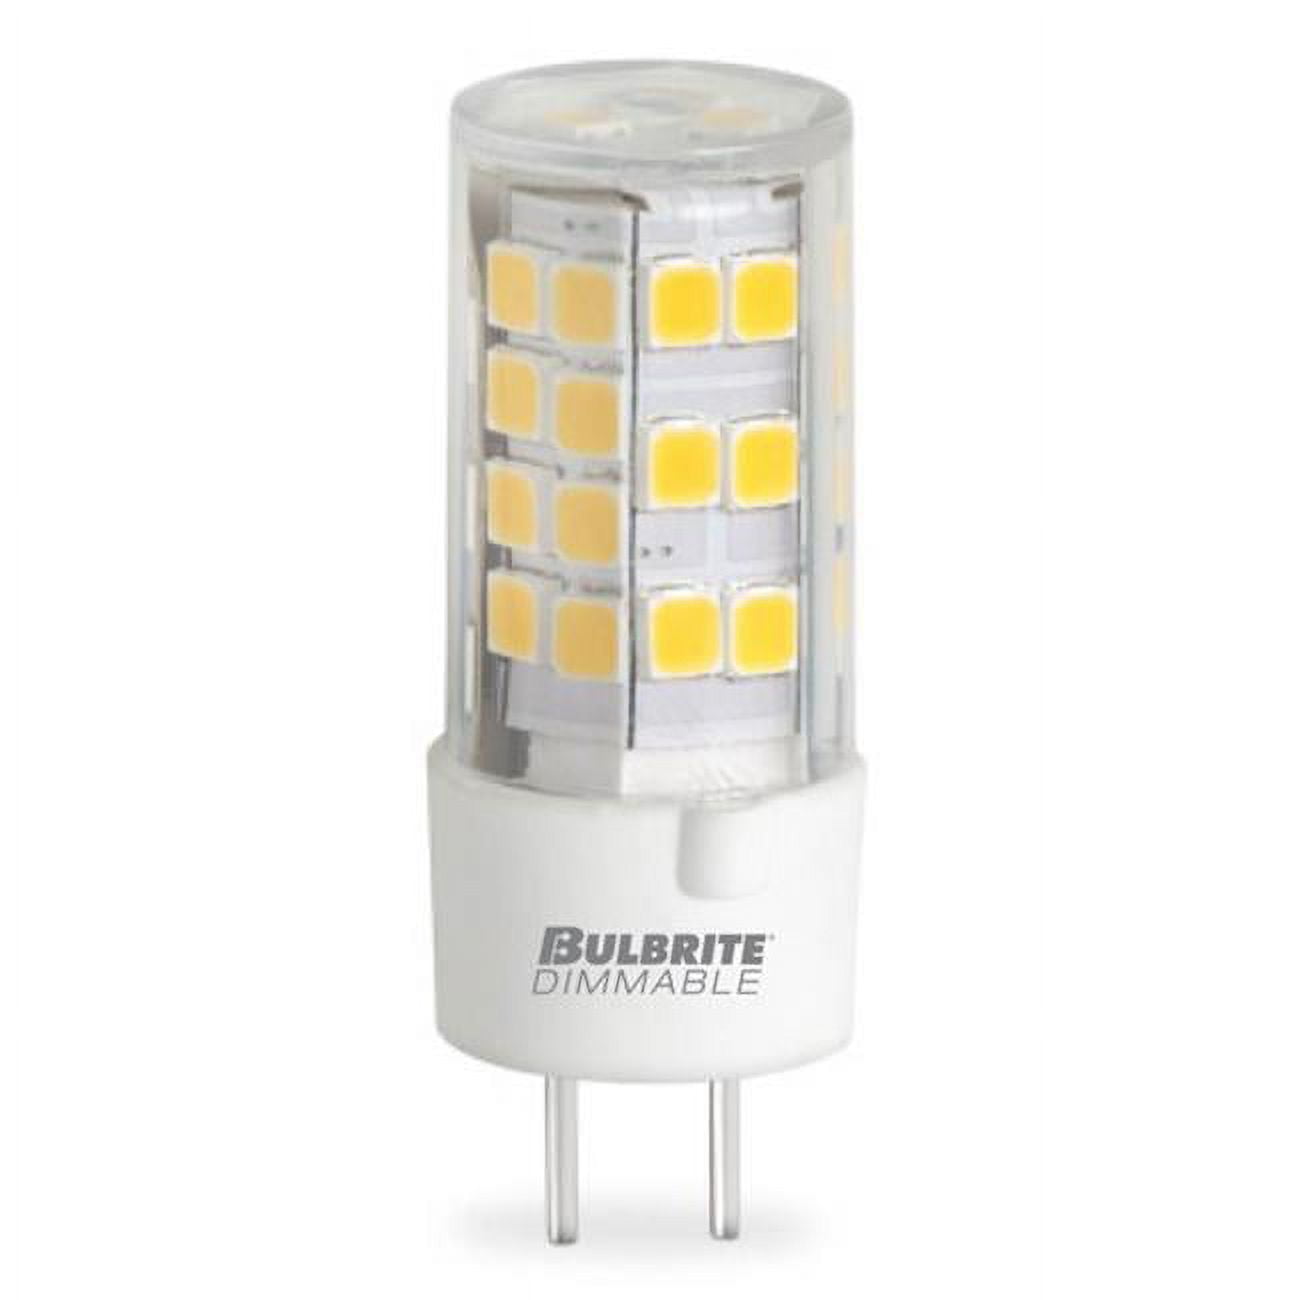 Picture of Bulbrite Pack of (2) 5 Watt 12V  Clear T7 LED Mini Light Bulbs with Bi-Pin (GY6.35) Base  2700K Warm White Light  550 Lumens